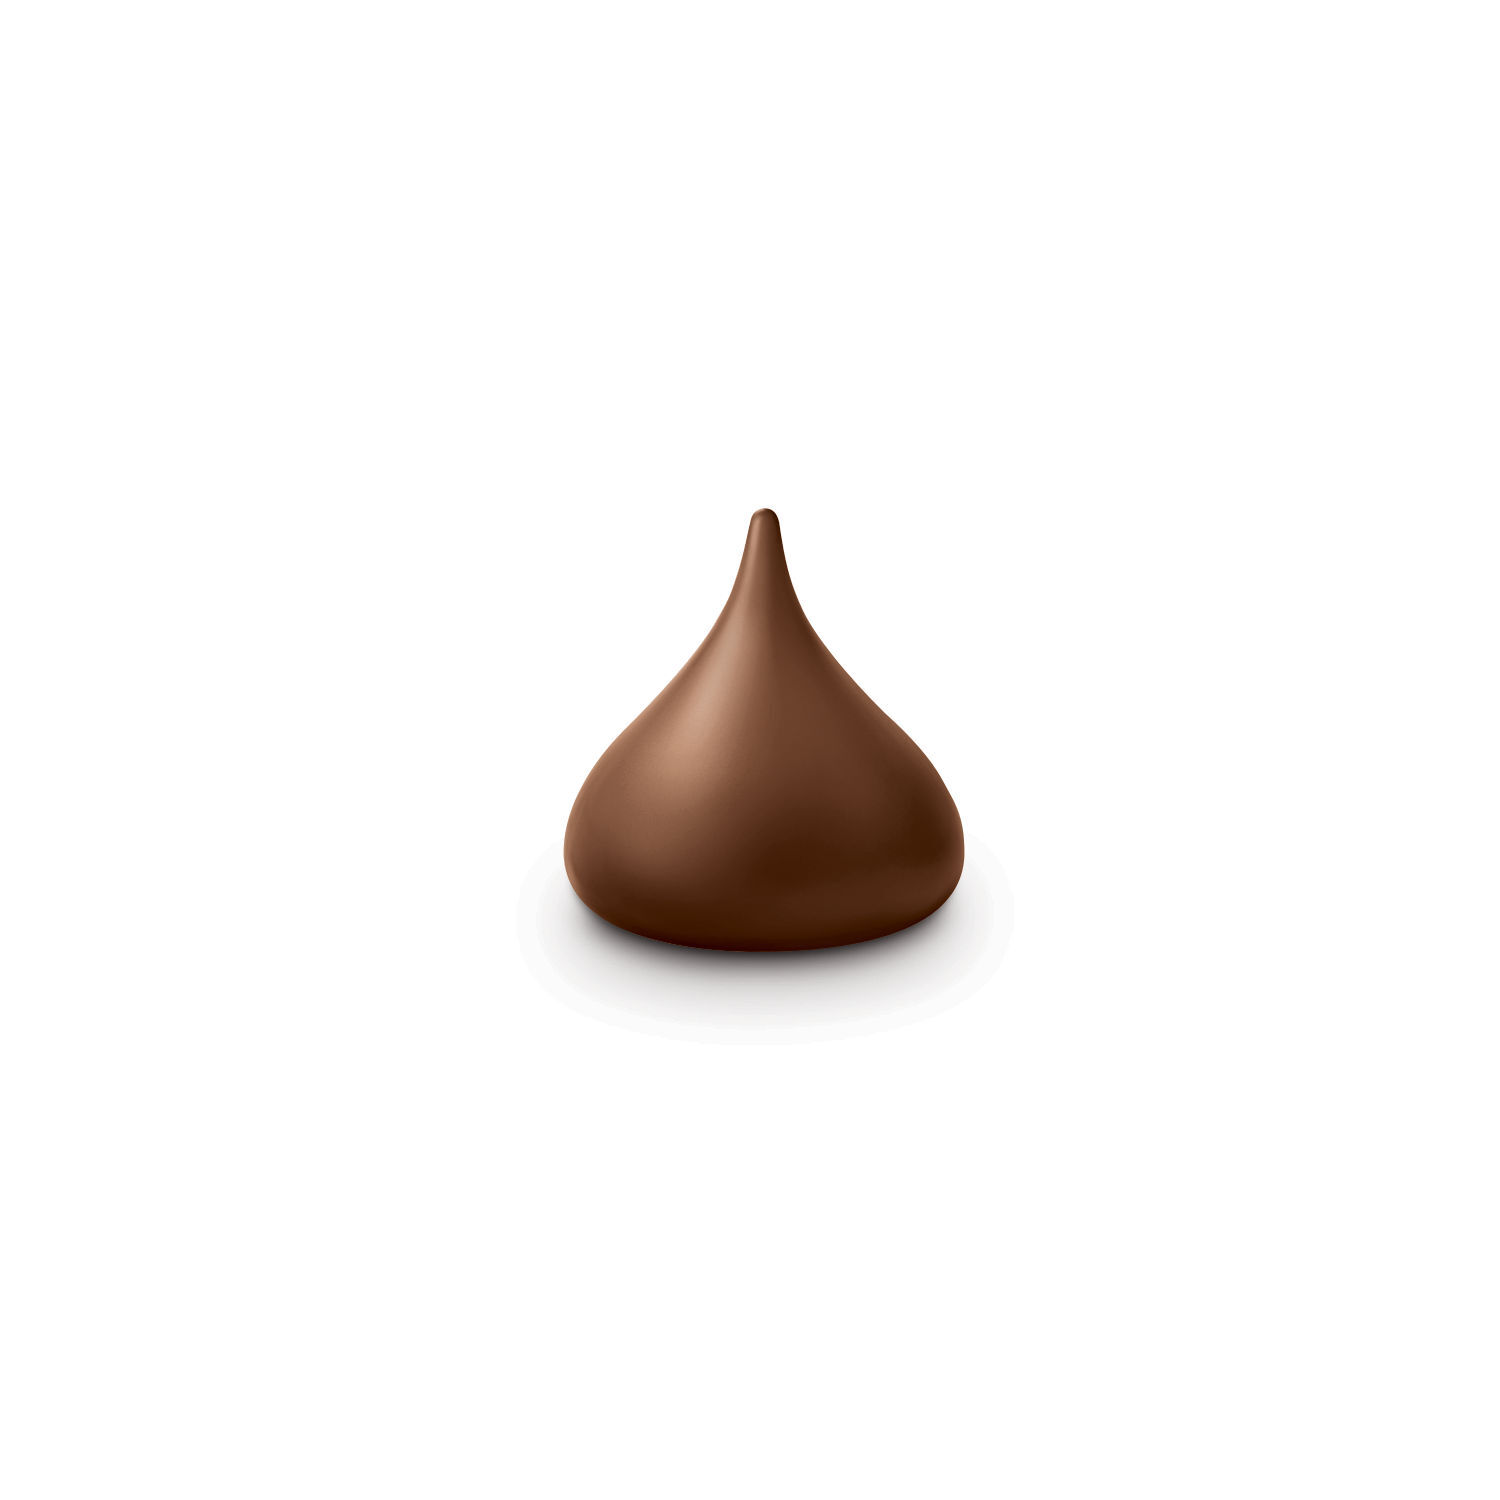 HERSHEY'S World's Largest Milk Chocolate KISS 1 lb. Candy Box